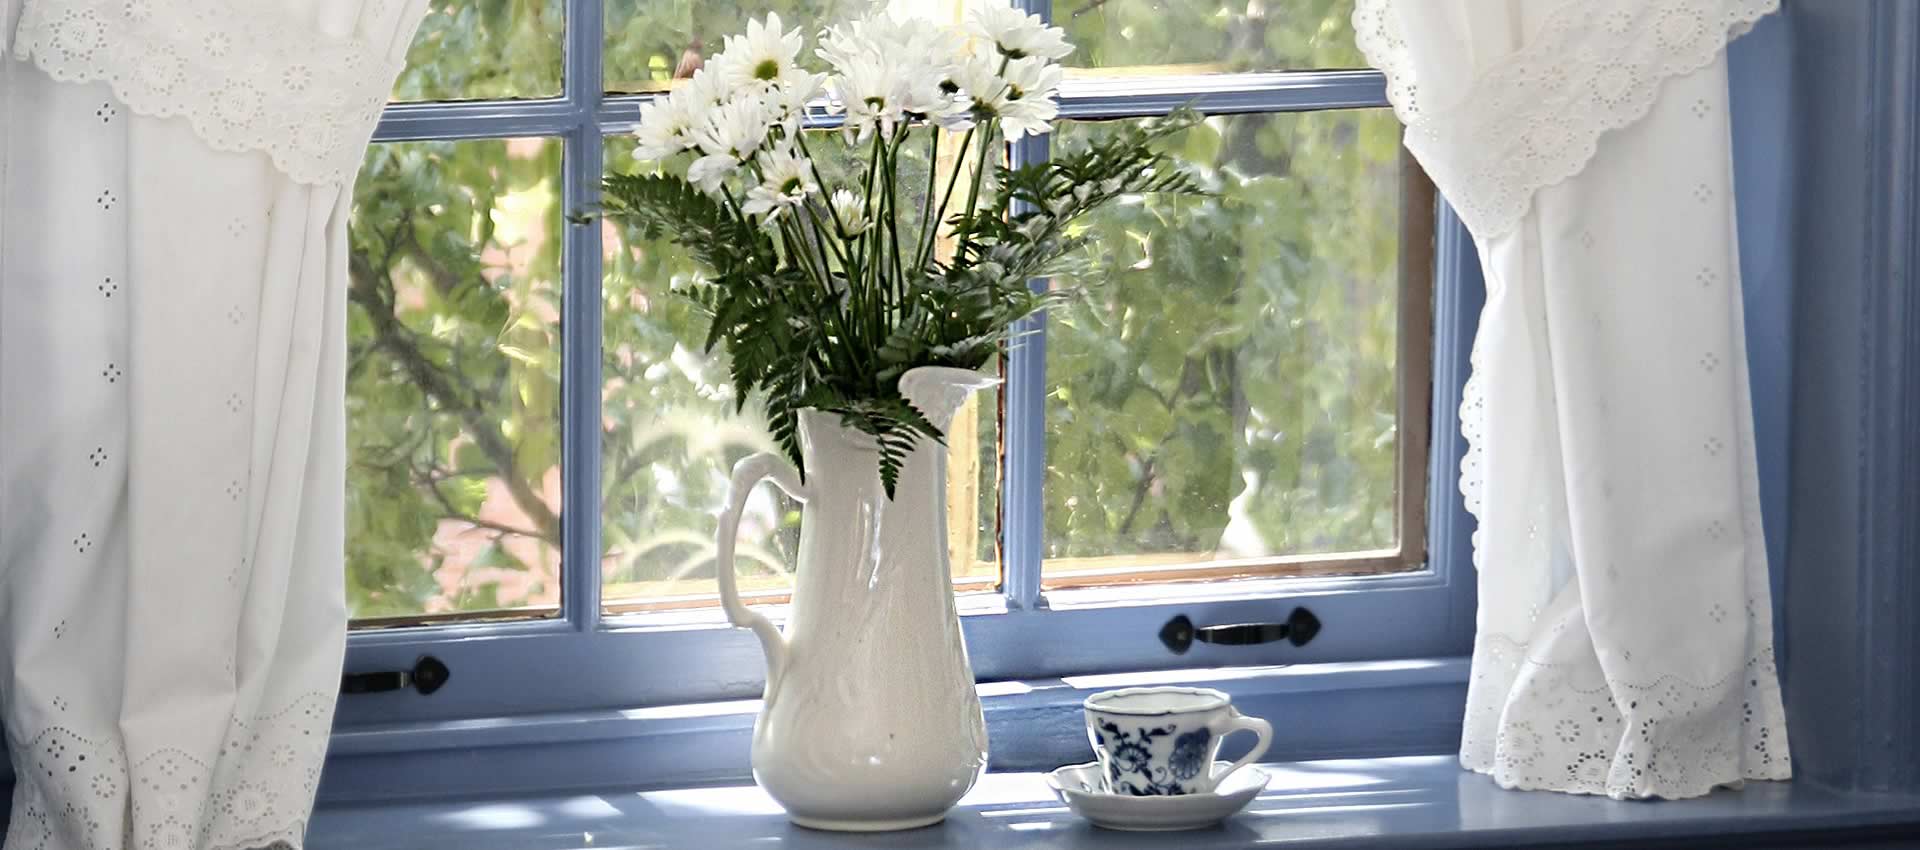 brafferton inn specials flower vase in window with tea cup